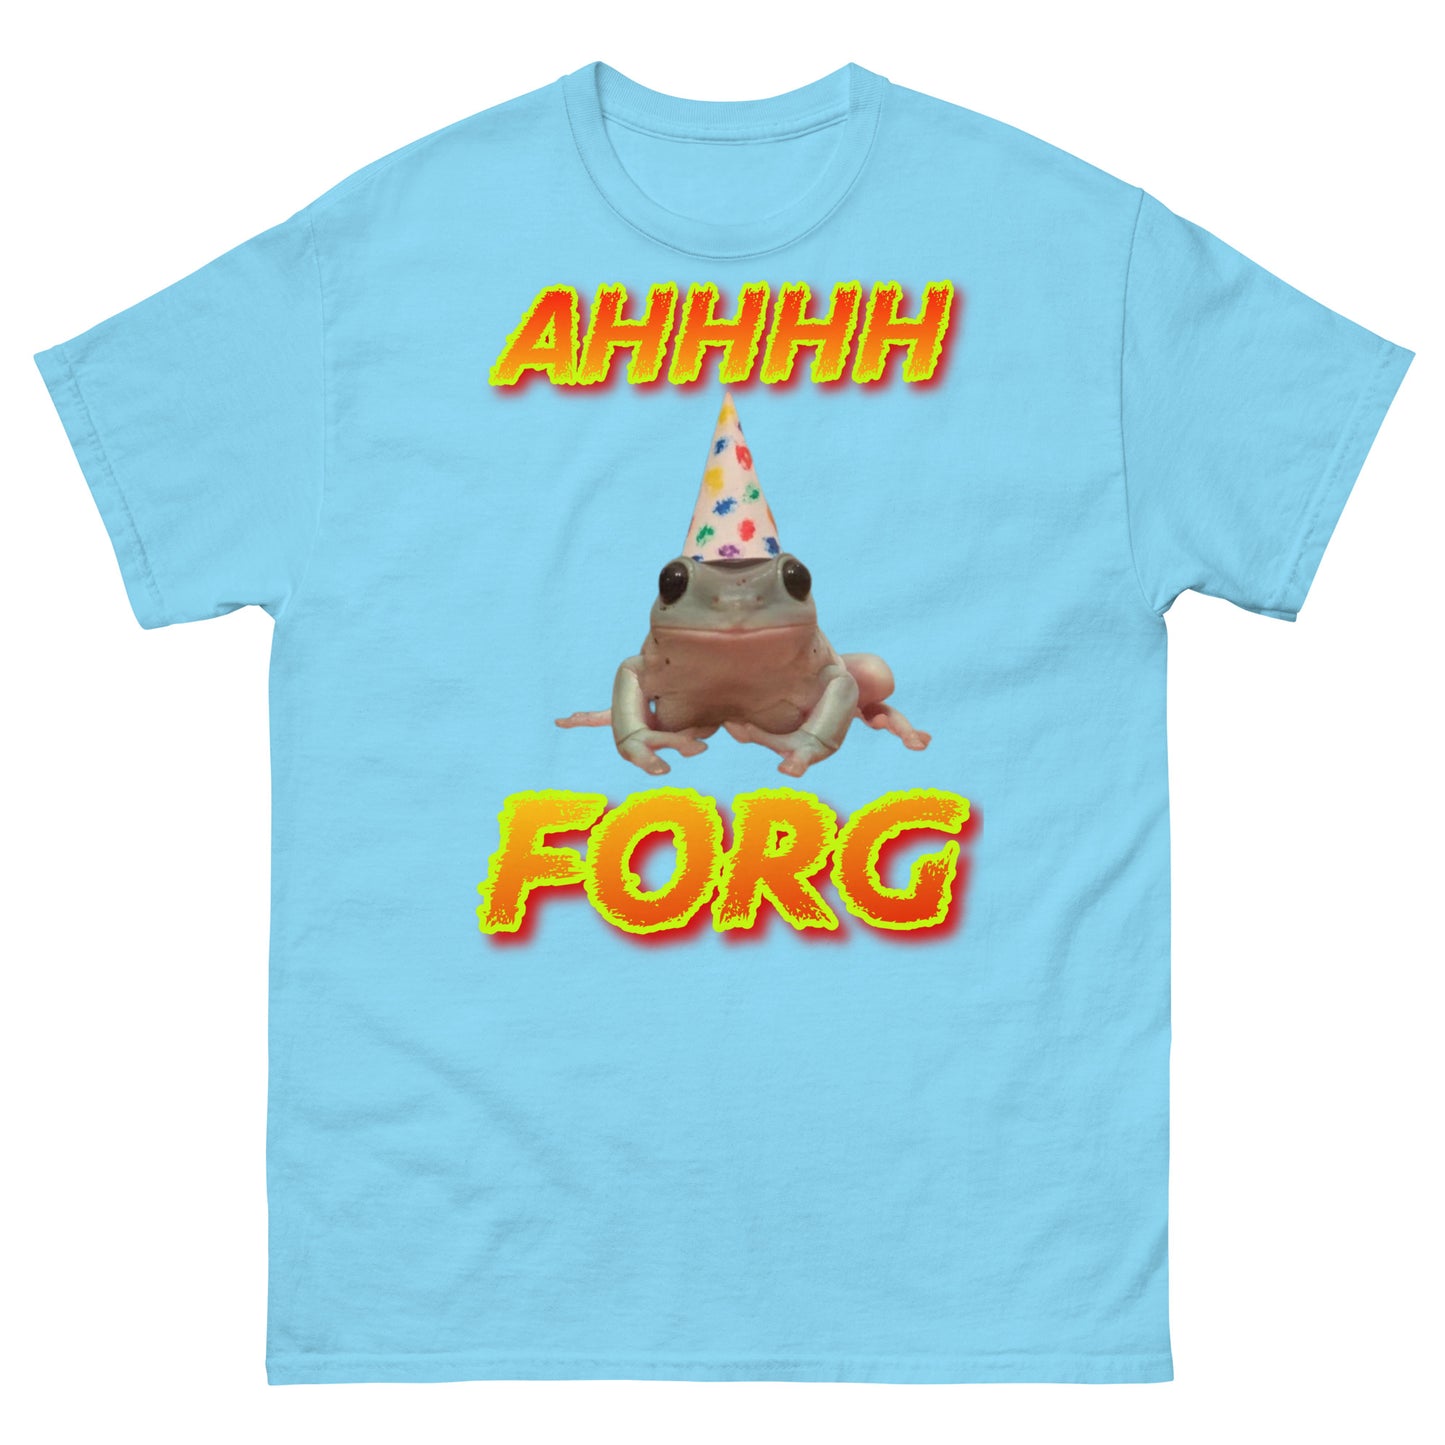 Frog / Forg Cringey Tee (Clean Version)